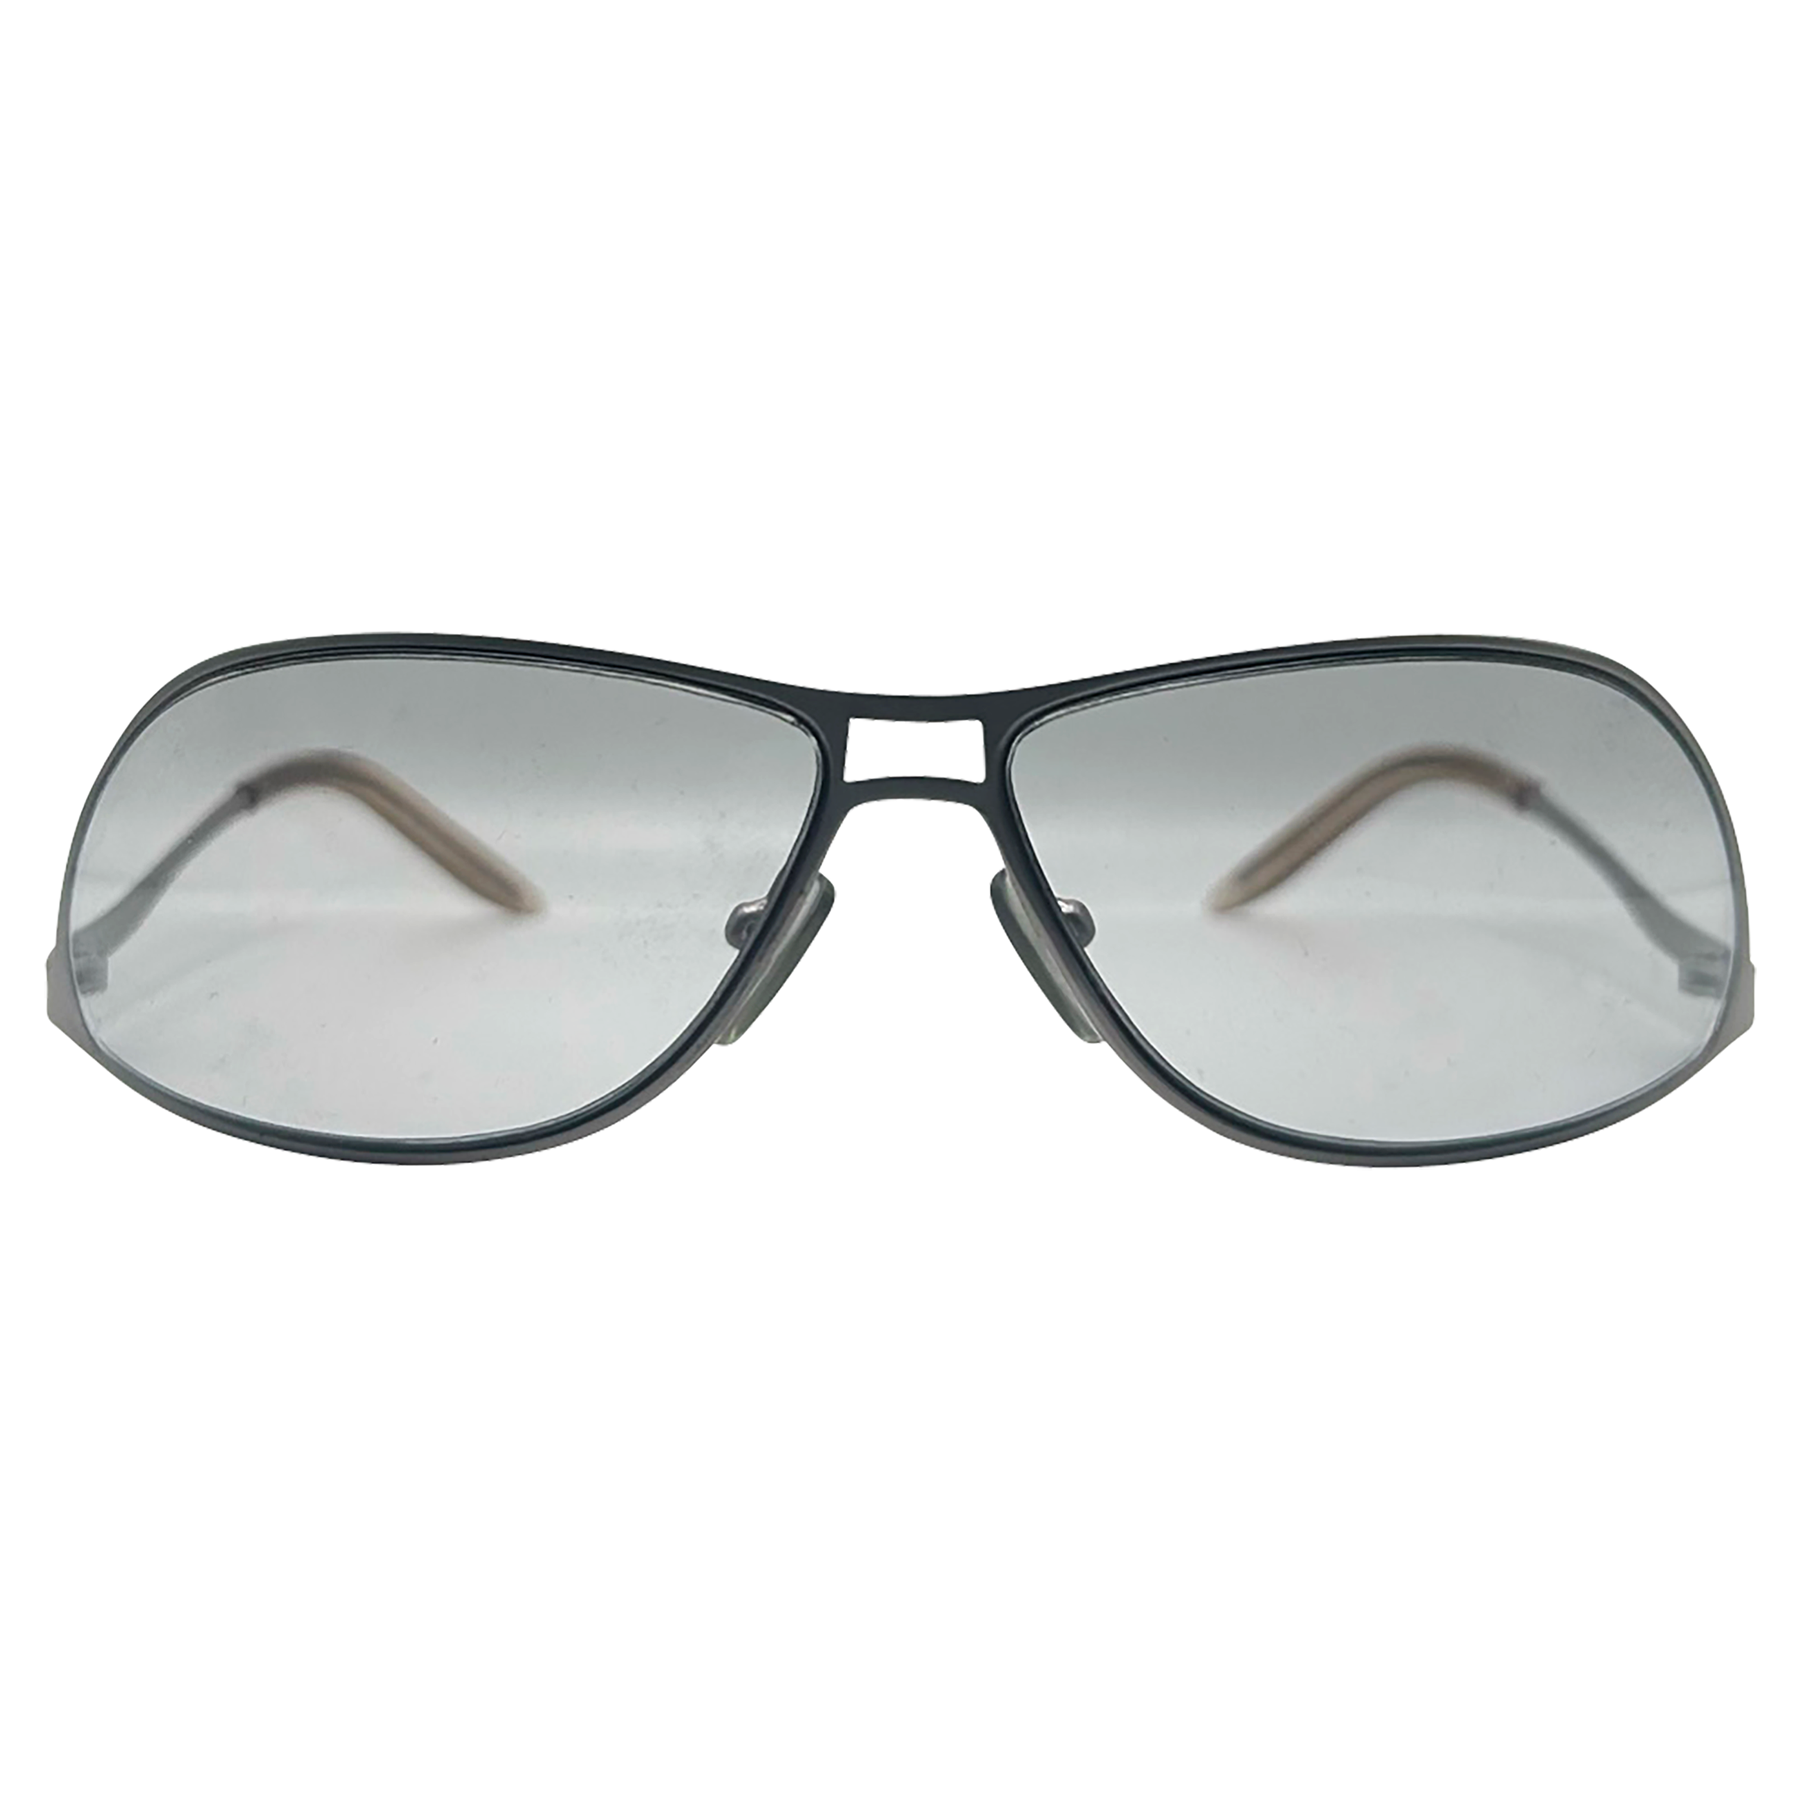 CYBORG Futuristic Sunglasses